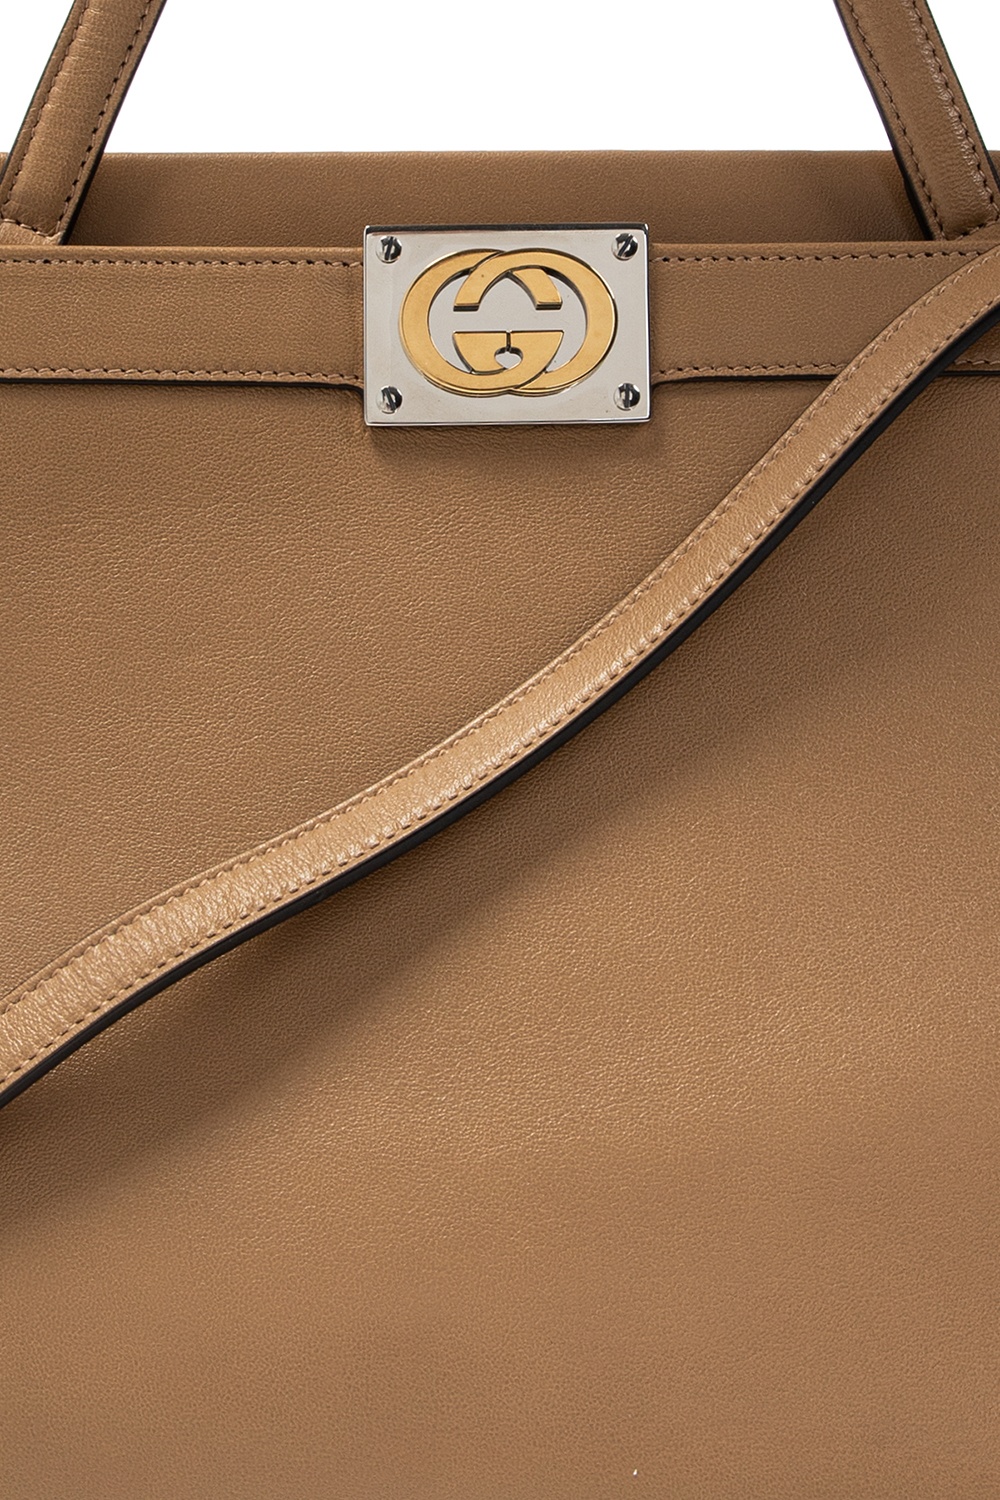 Gucci Borsa engraved gucci Jackie vintage in tela monogram grigia e pelle marrone